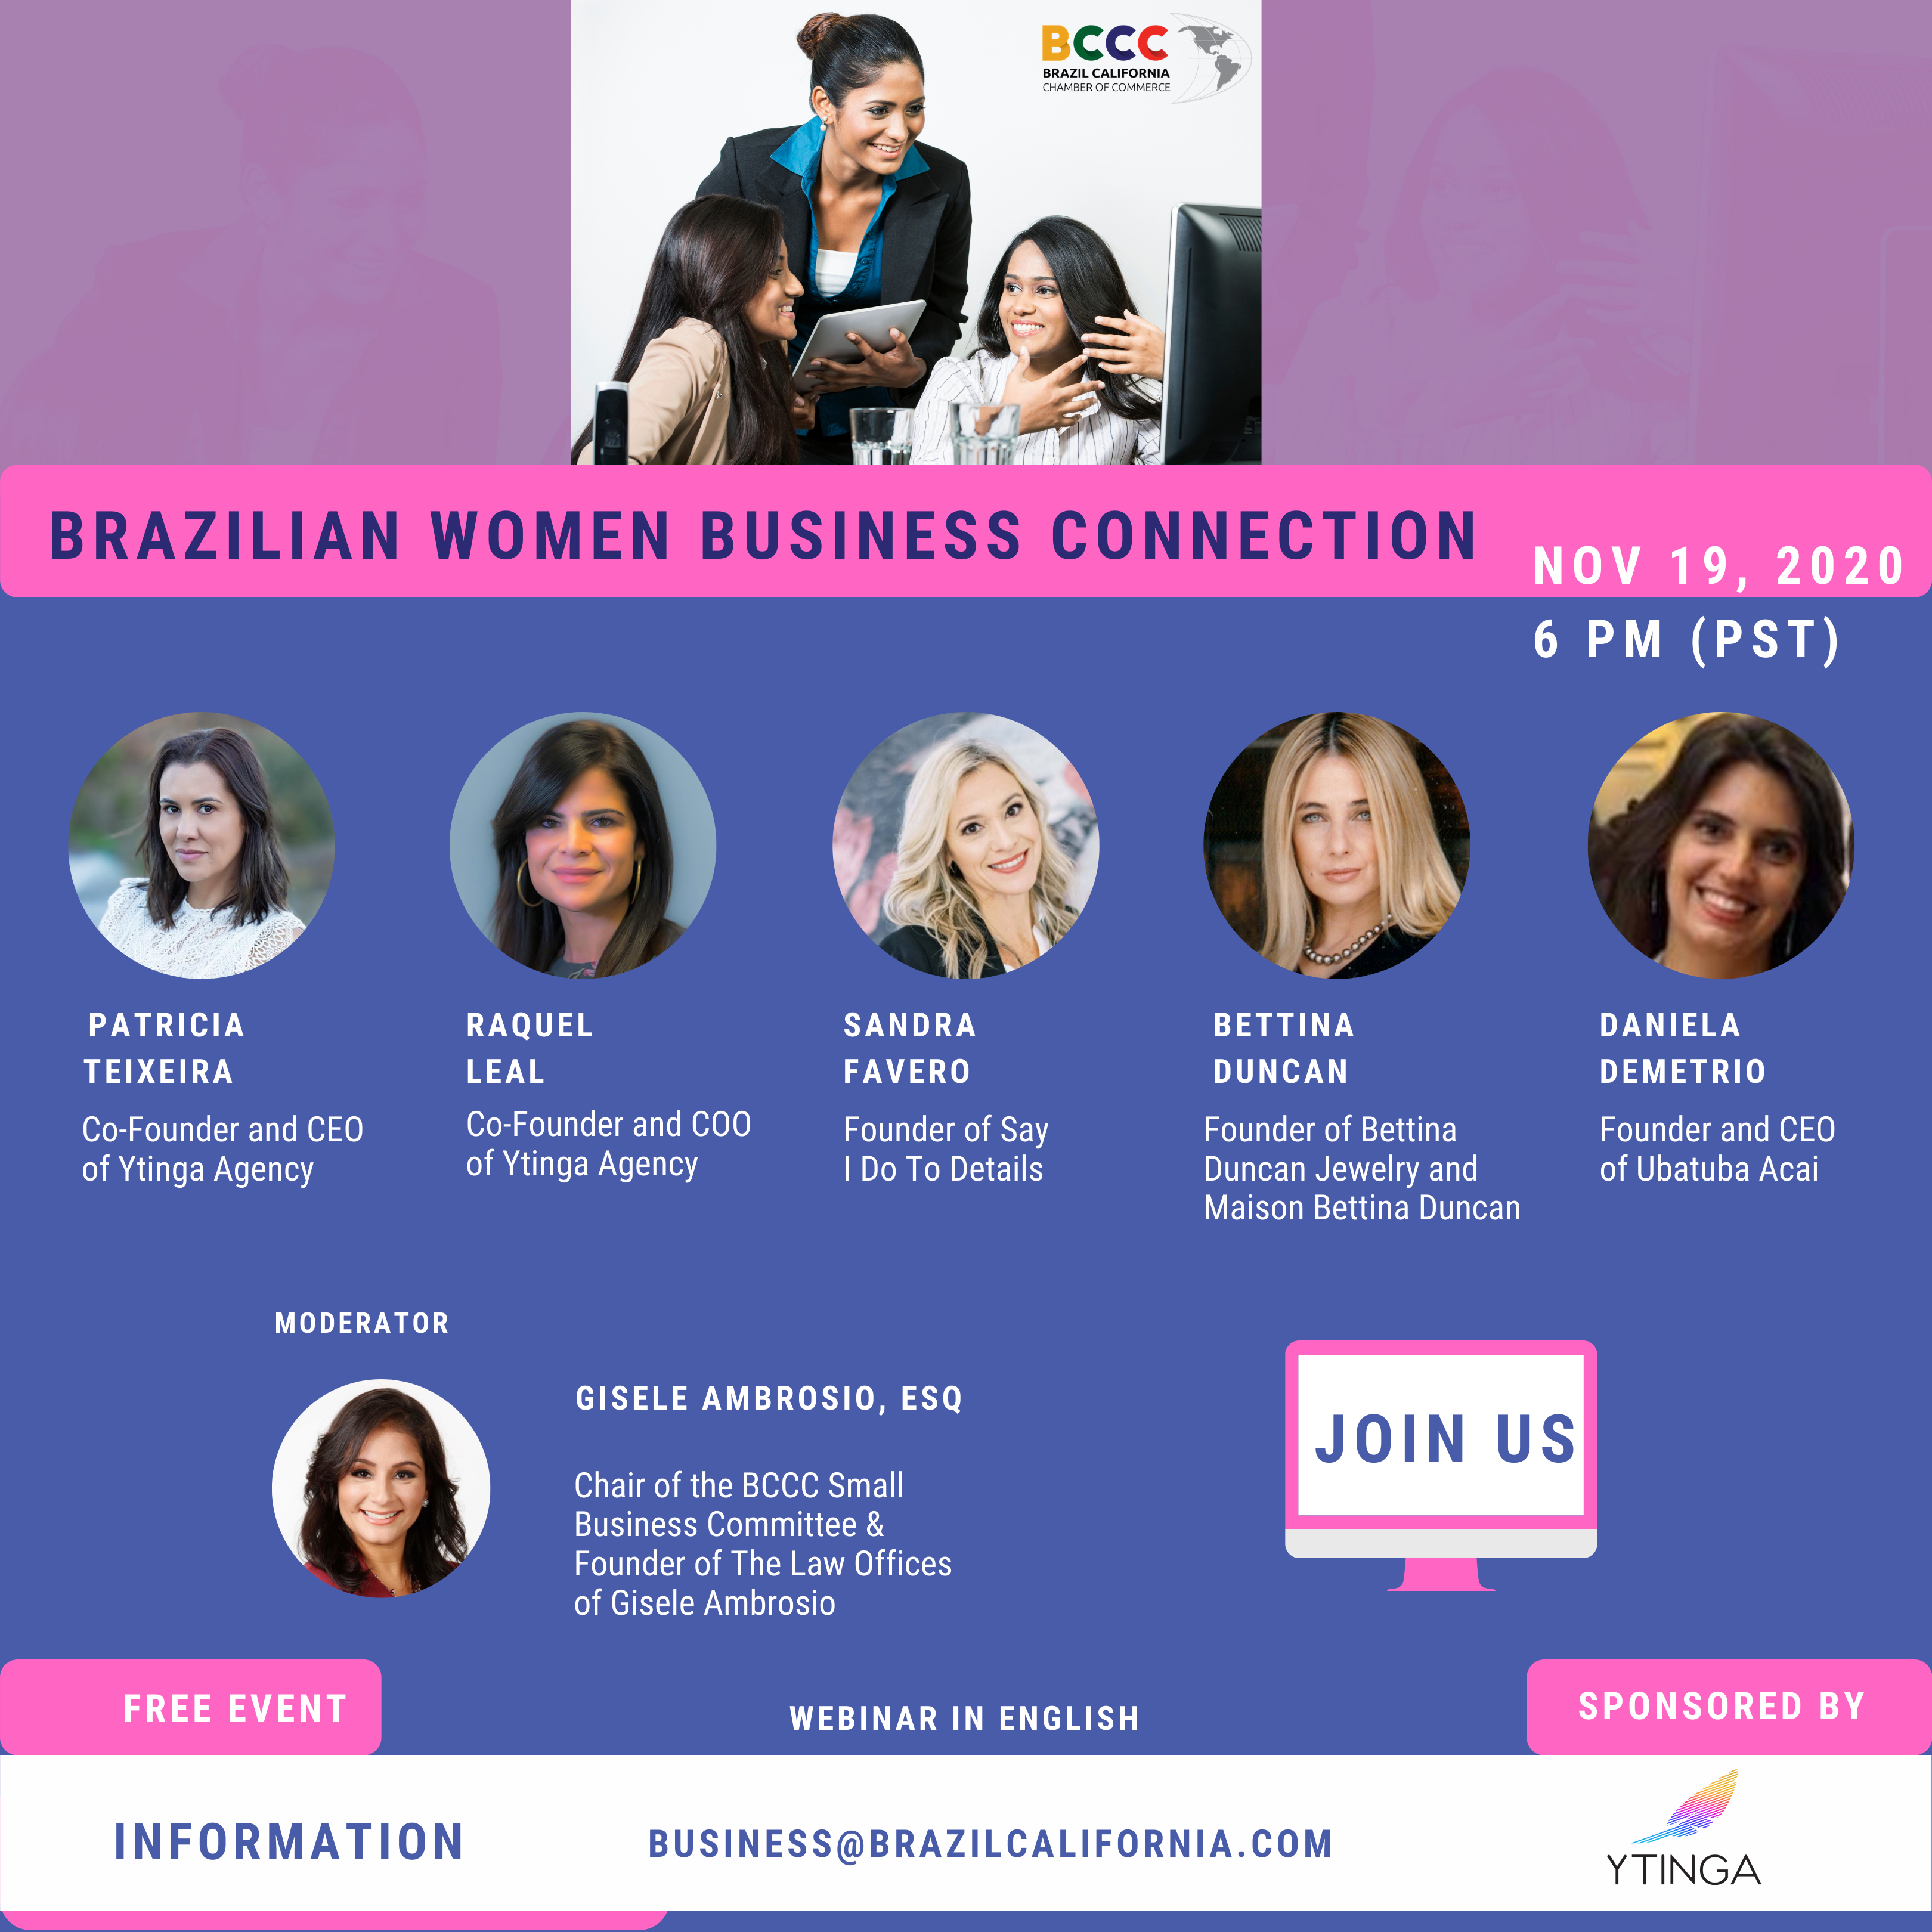 BRAZILIAN WOMEN BUSINESS CONNECTION